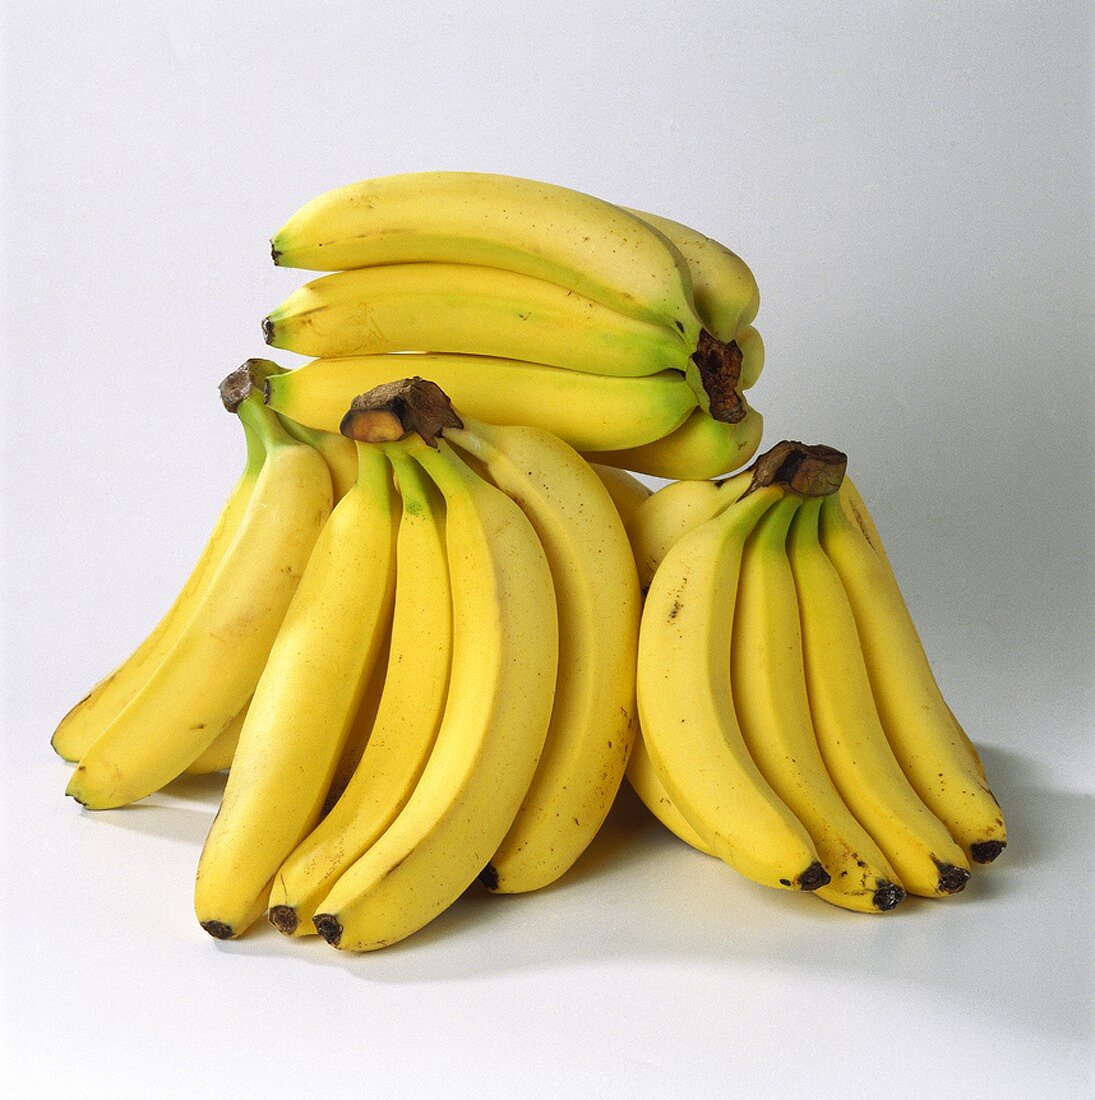 Bananenstauden